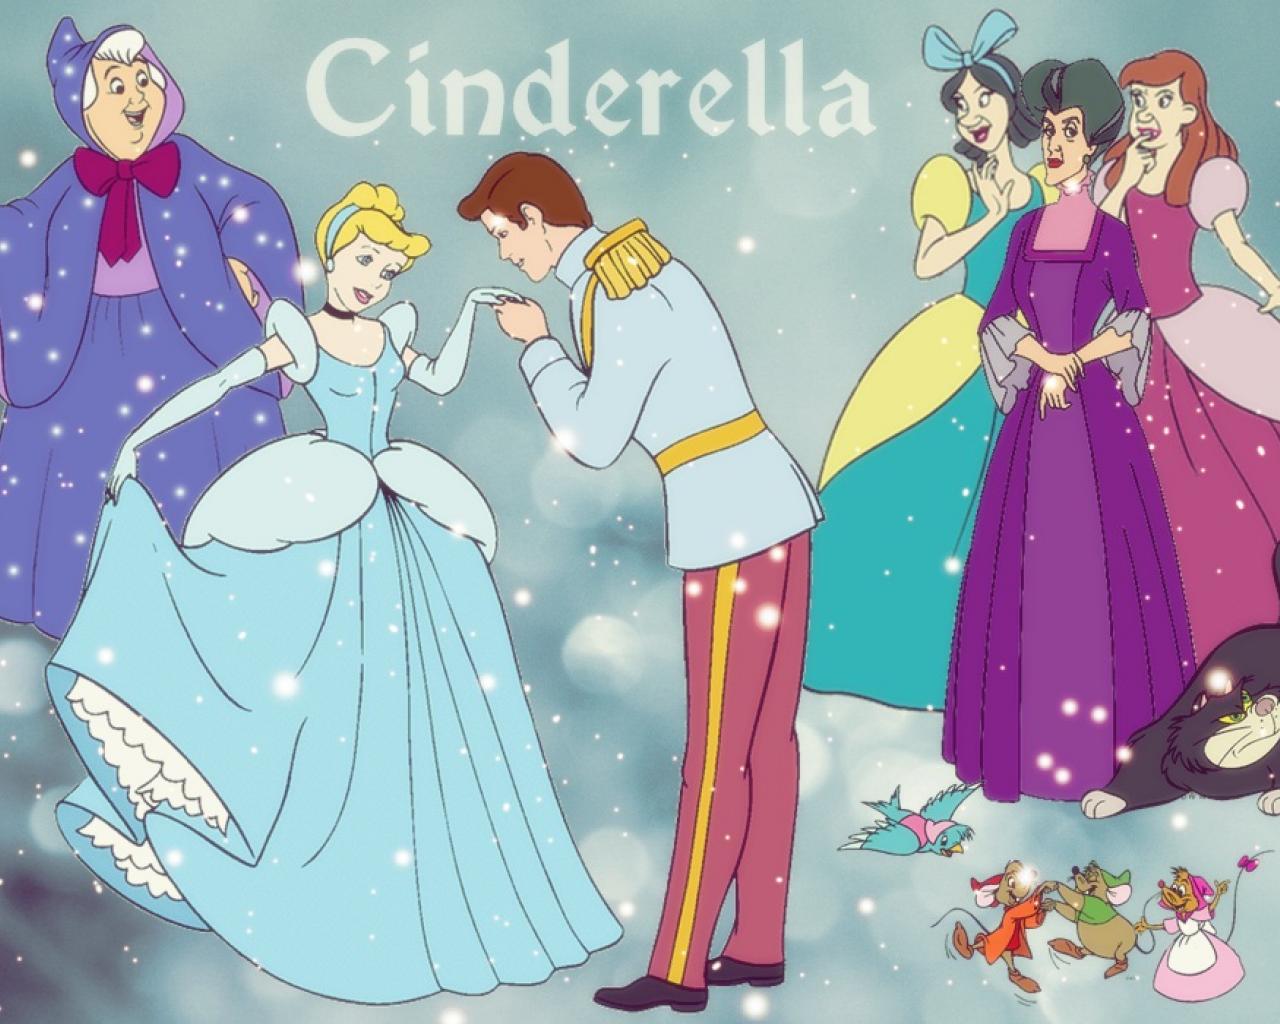 Disney 4K Cinderella HD wallpaper  Wallpaperbetter